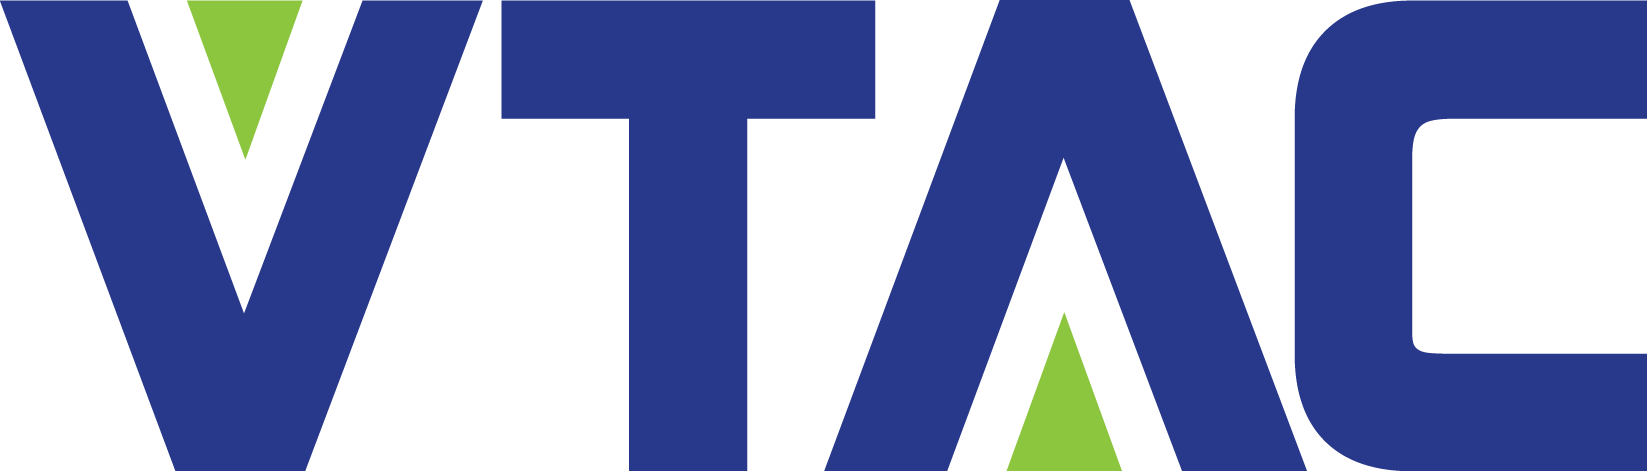 VTAC_logo